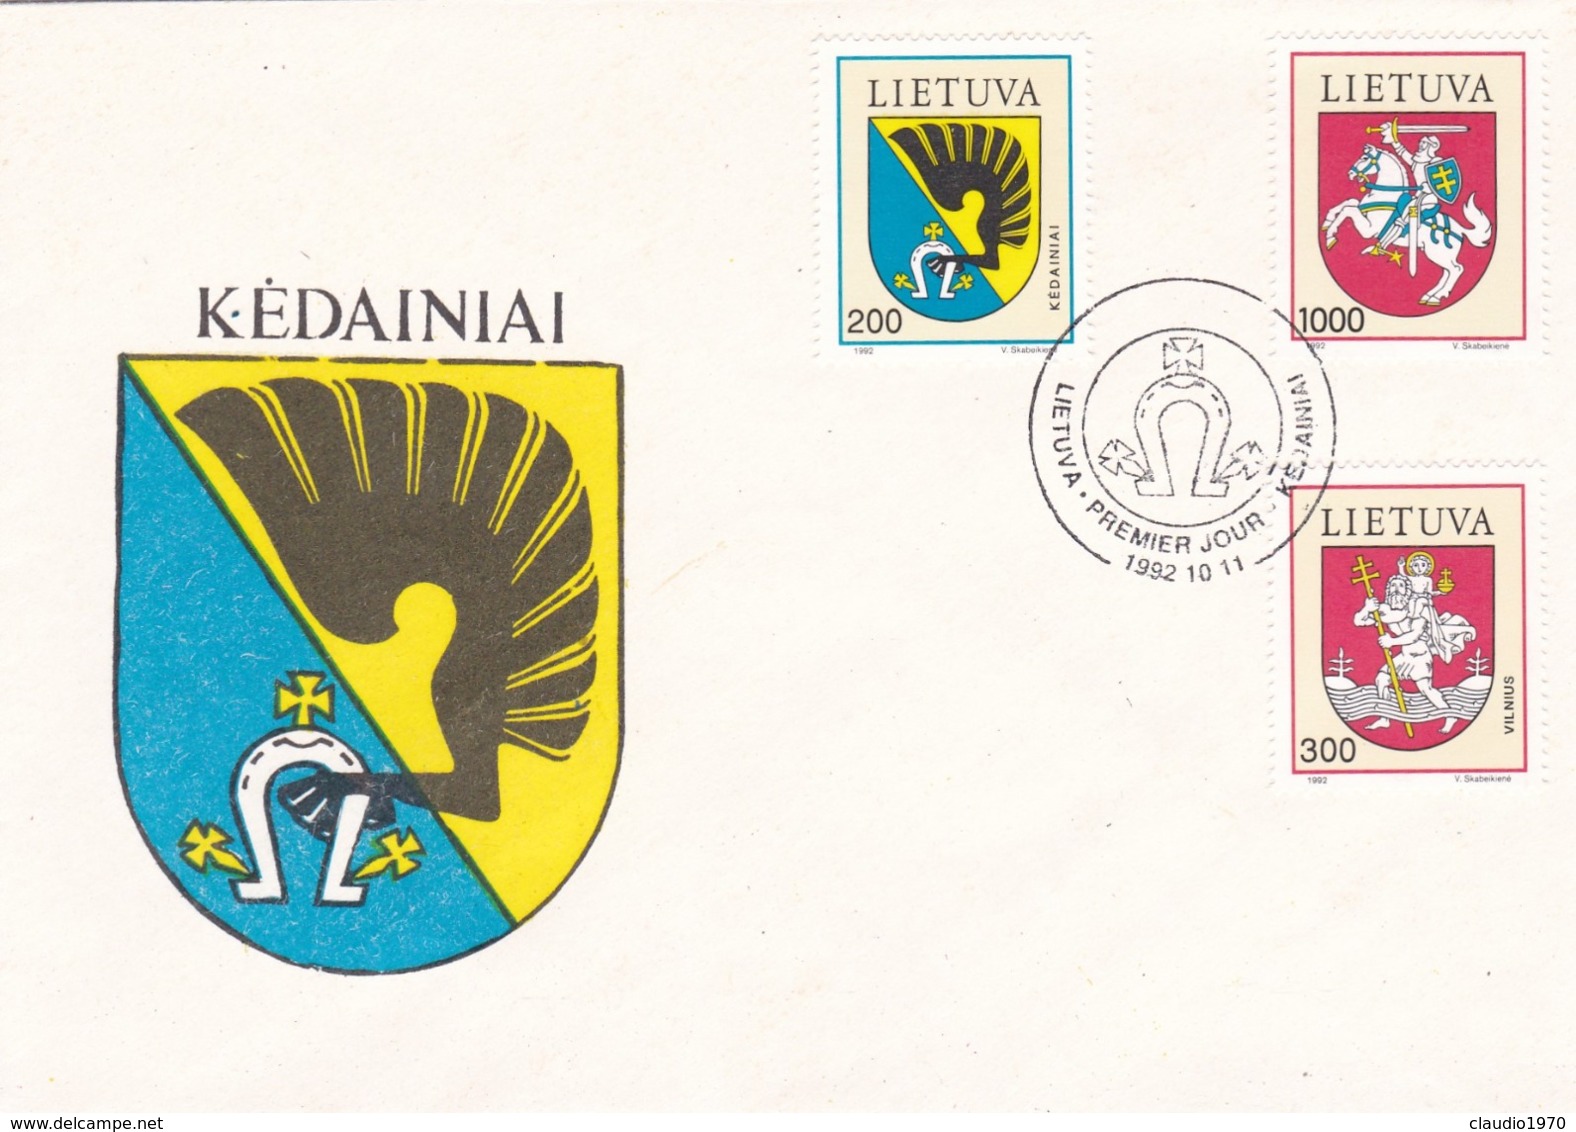 BUSTA FDC - LITUANIA - KEDAINIAI - 1992 - Lituania